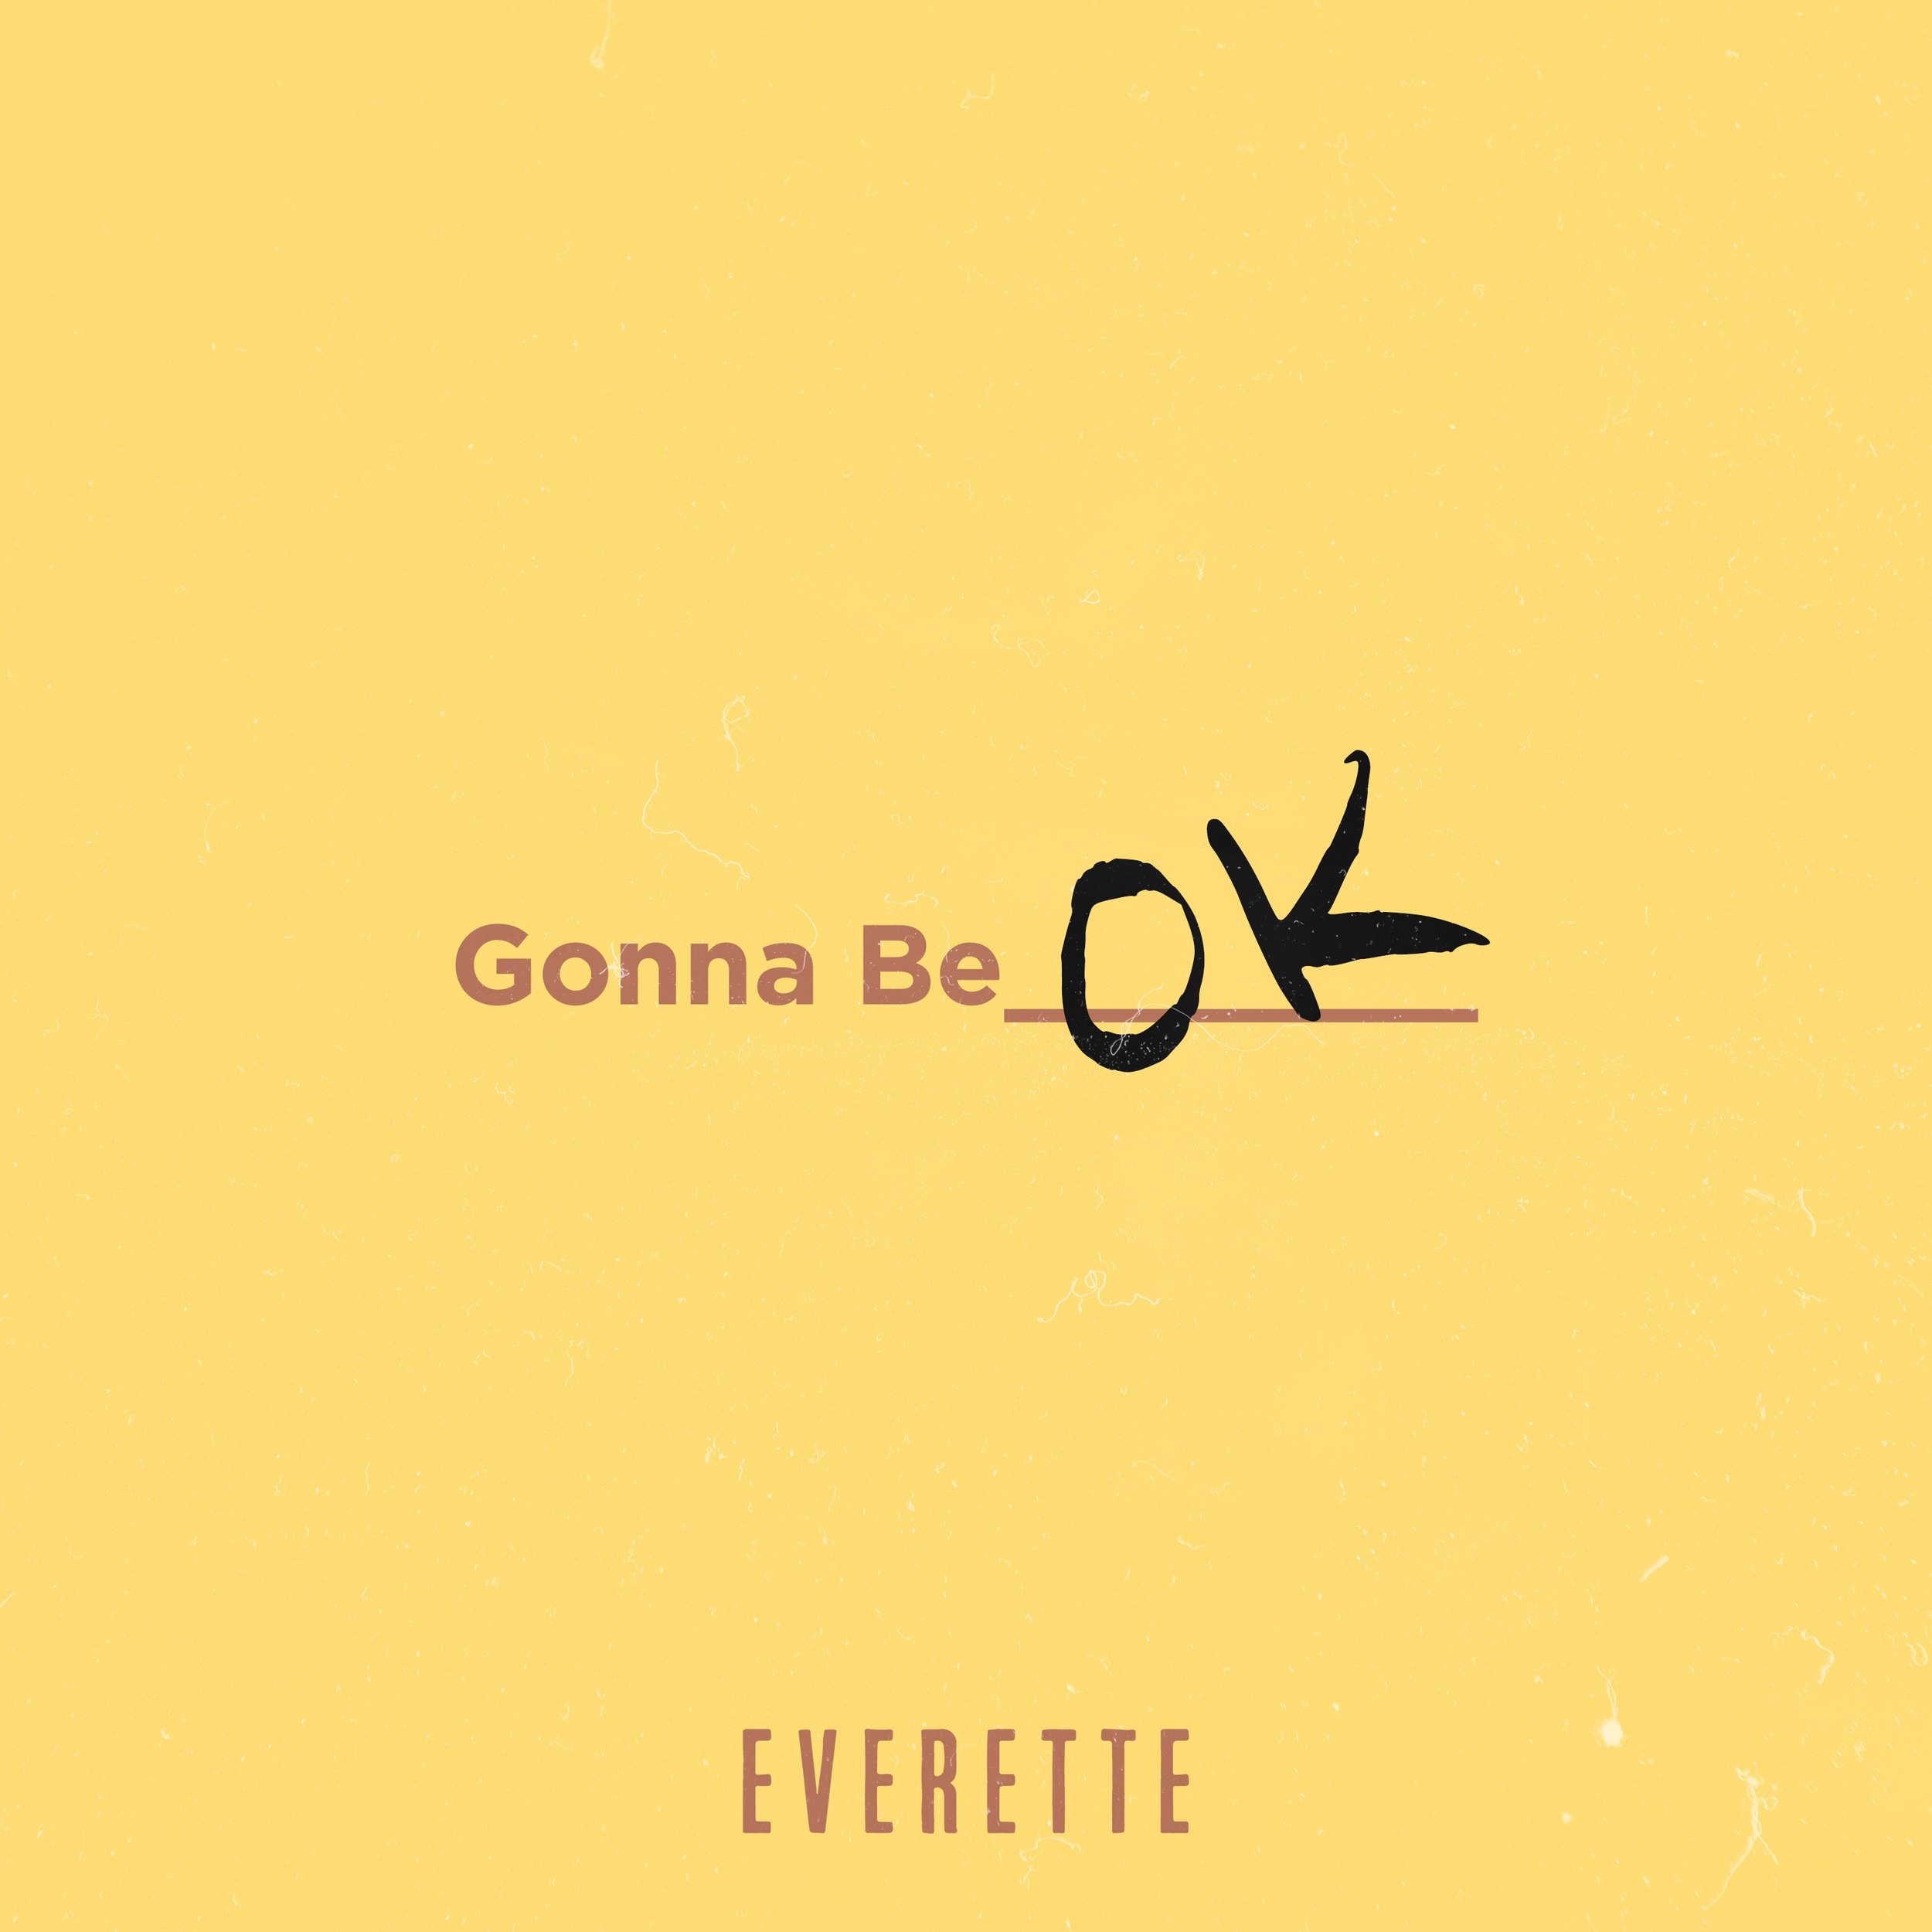 EVERETTE - Gonna Be OK